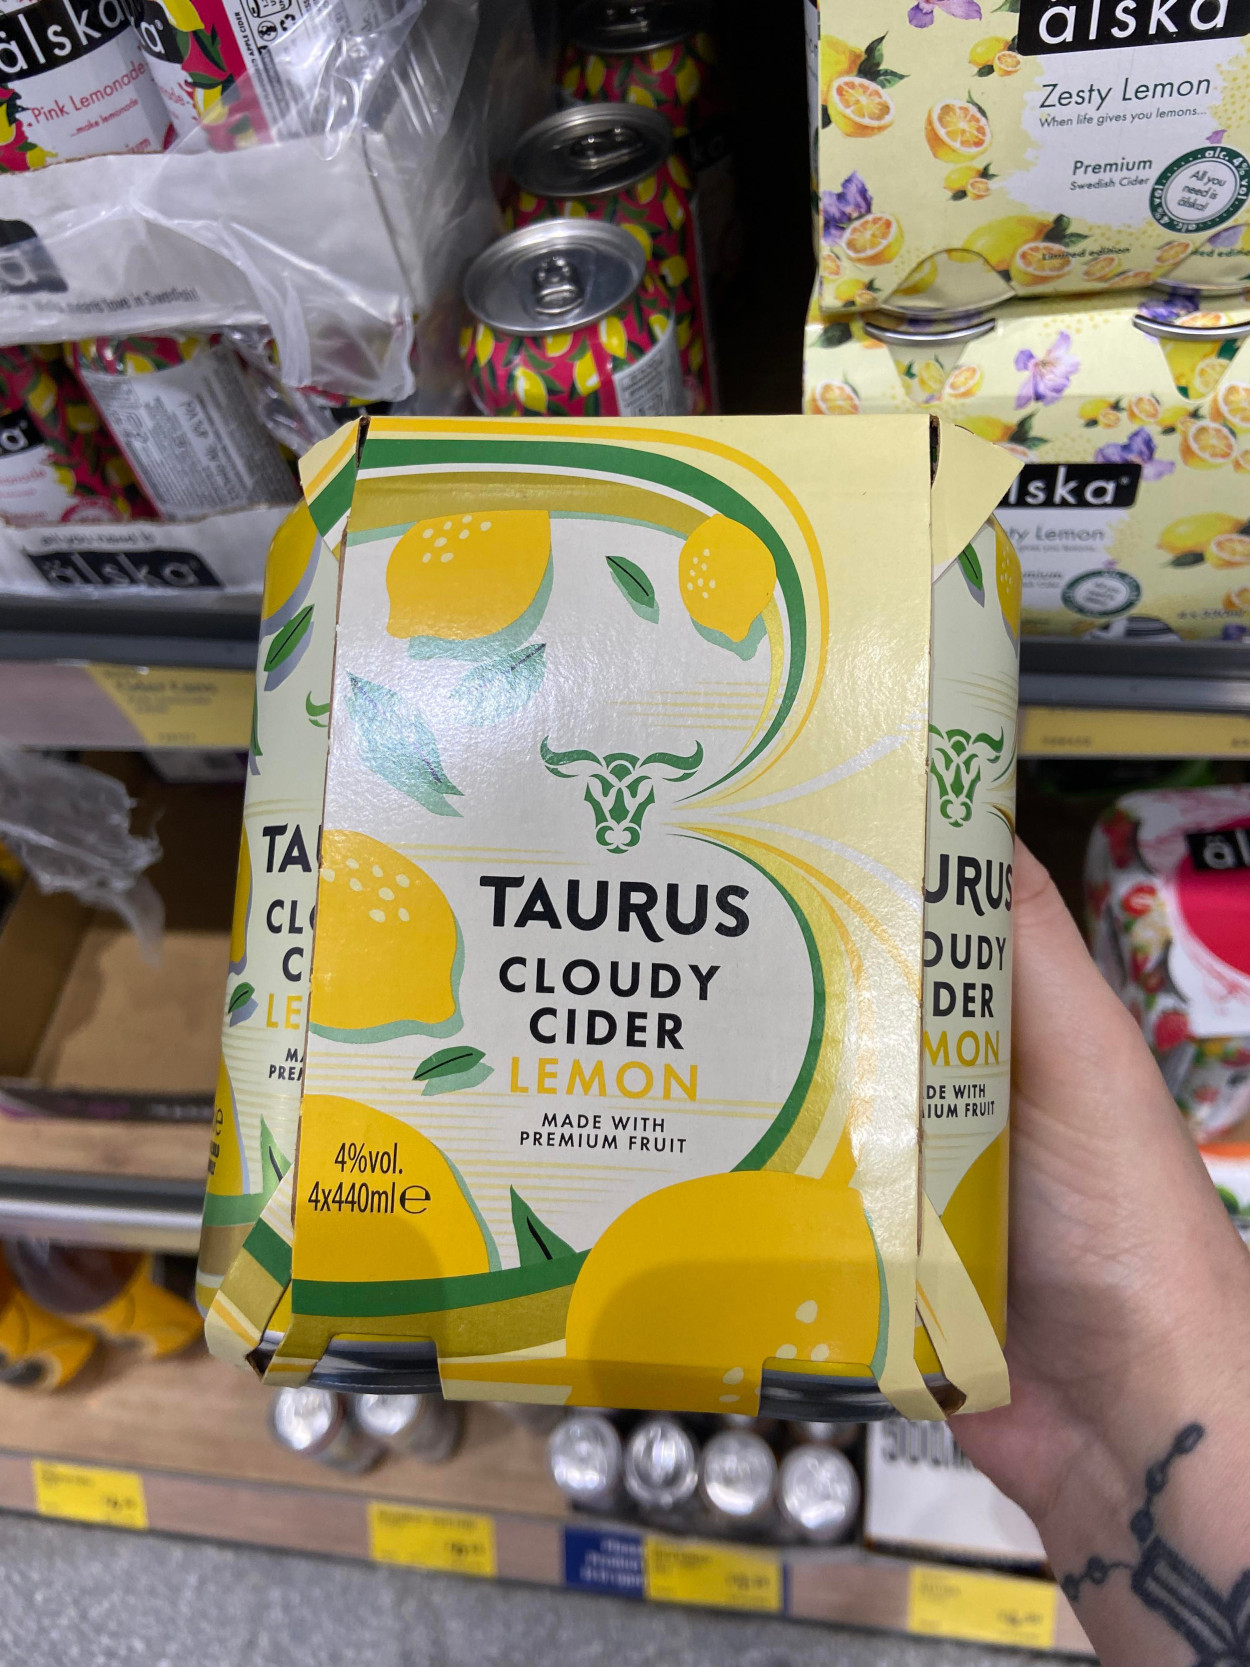 taurus cloudy lemon cider